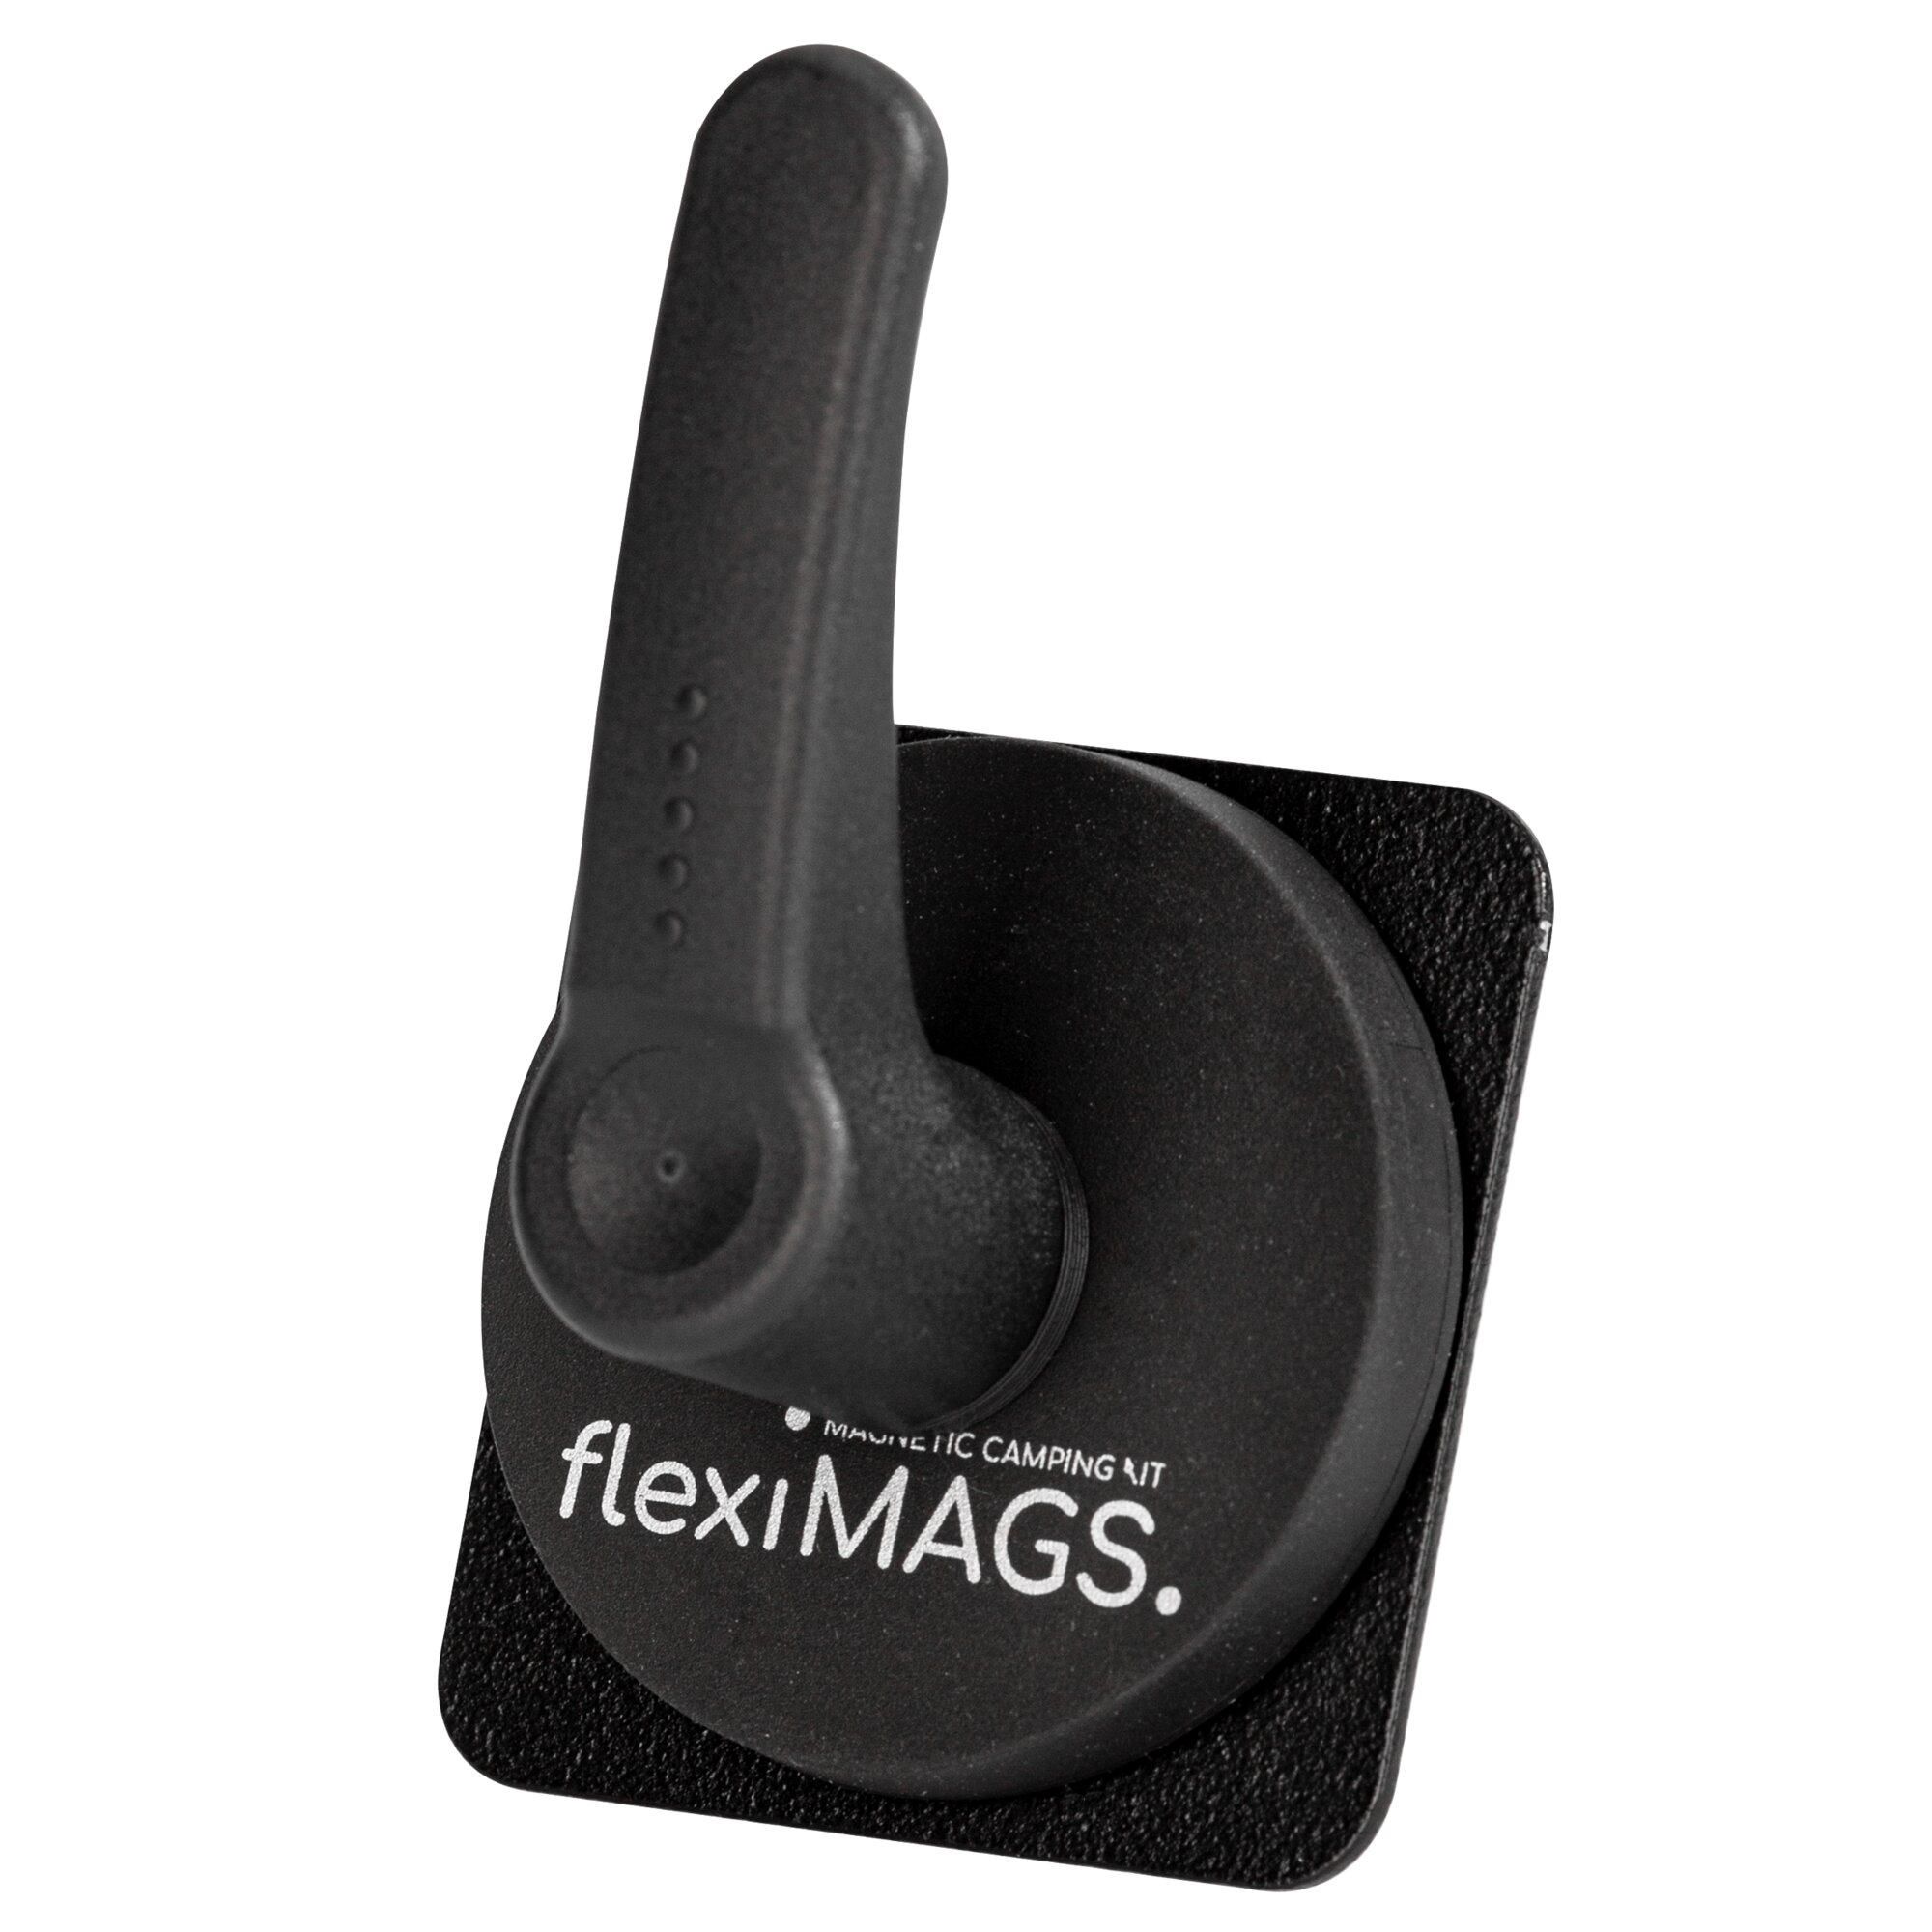 Handtuchhalter-Set flexiMAGS